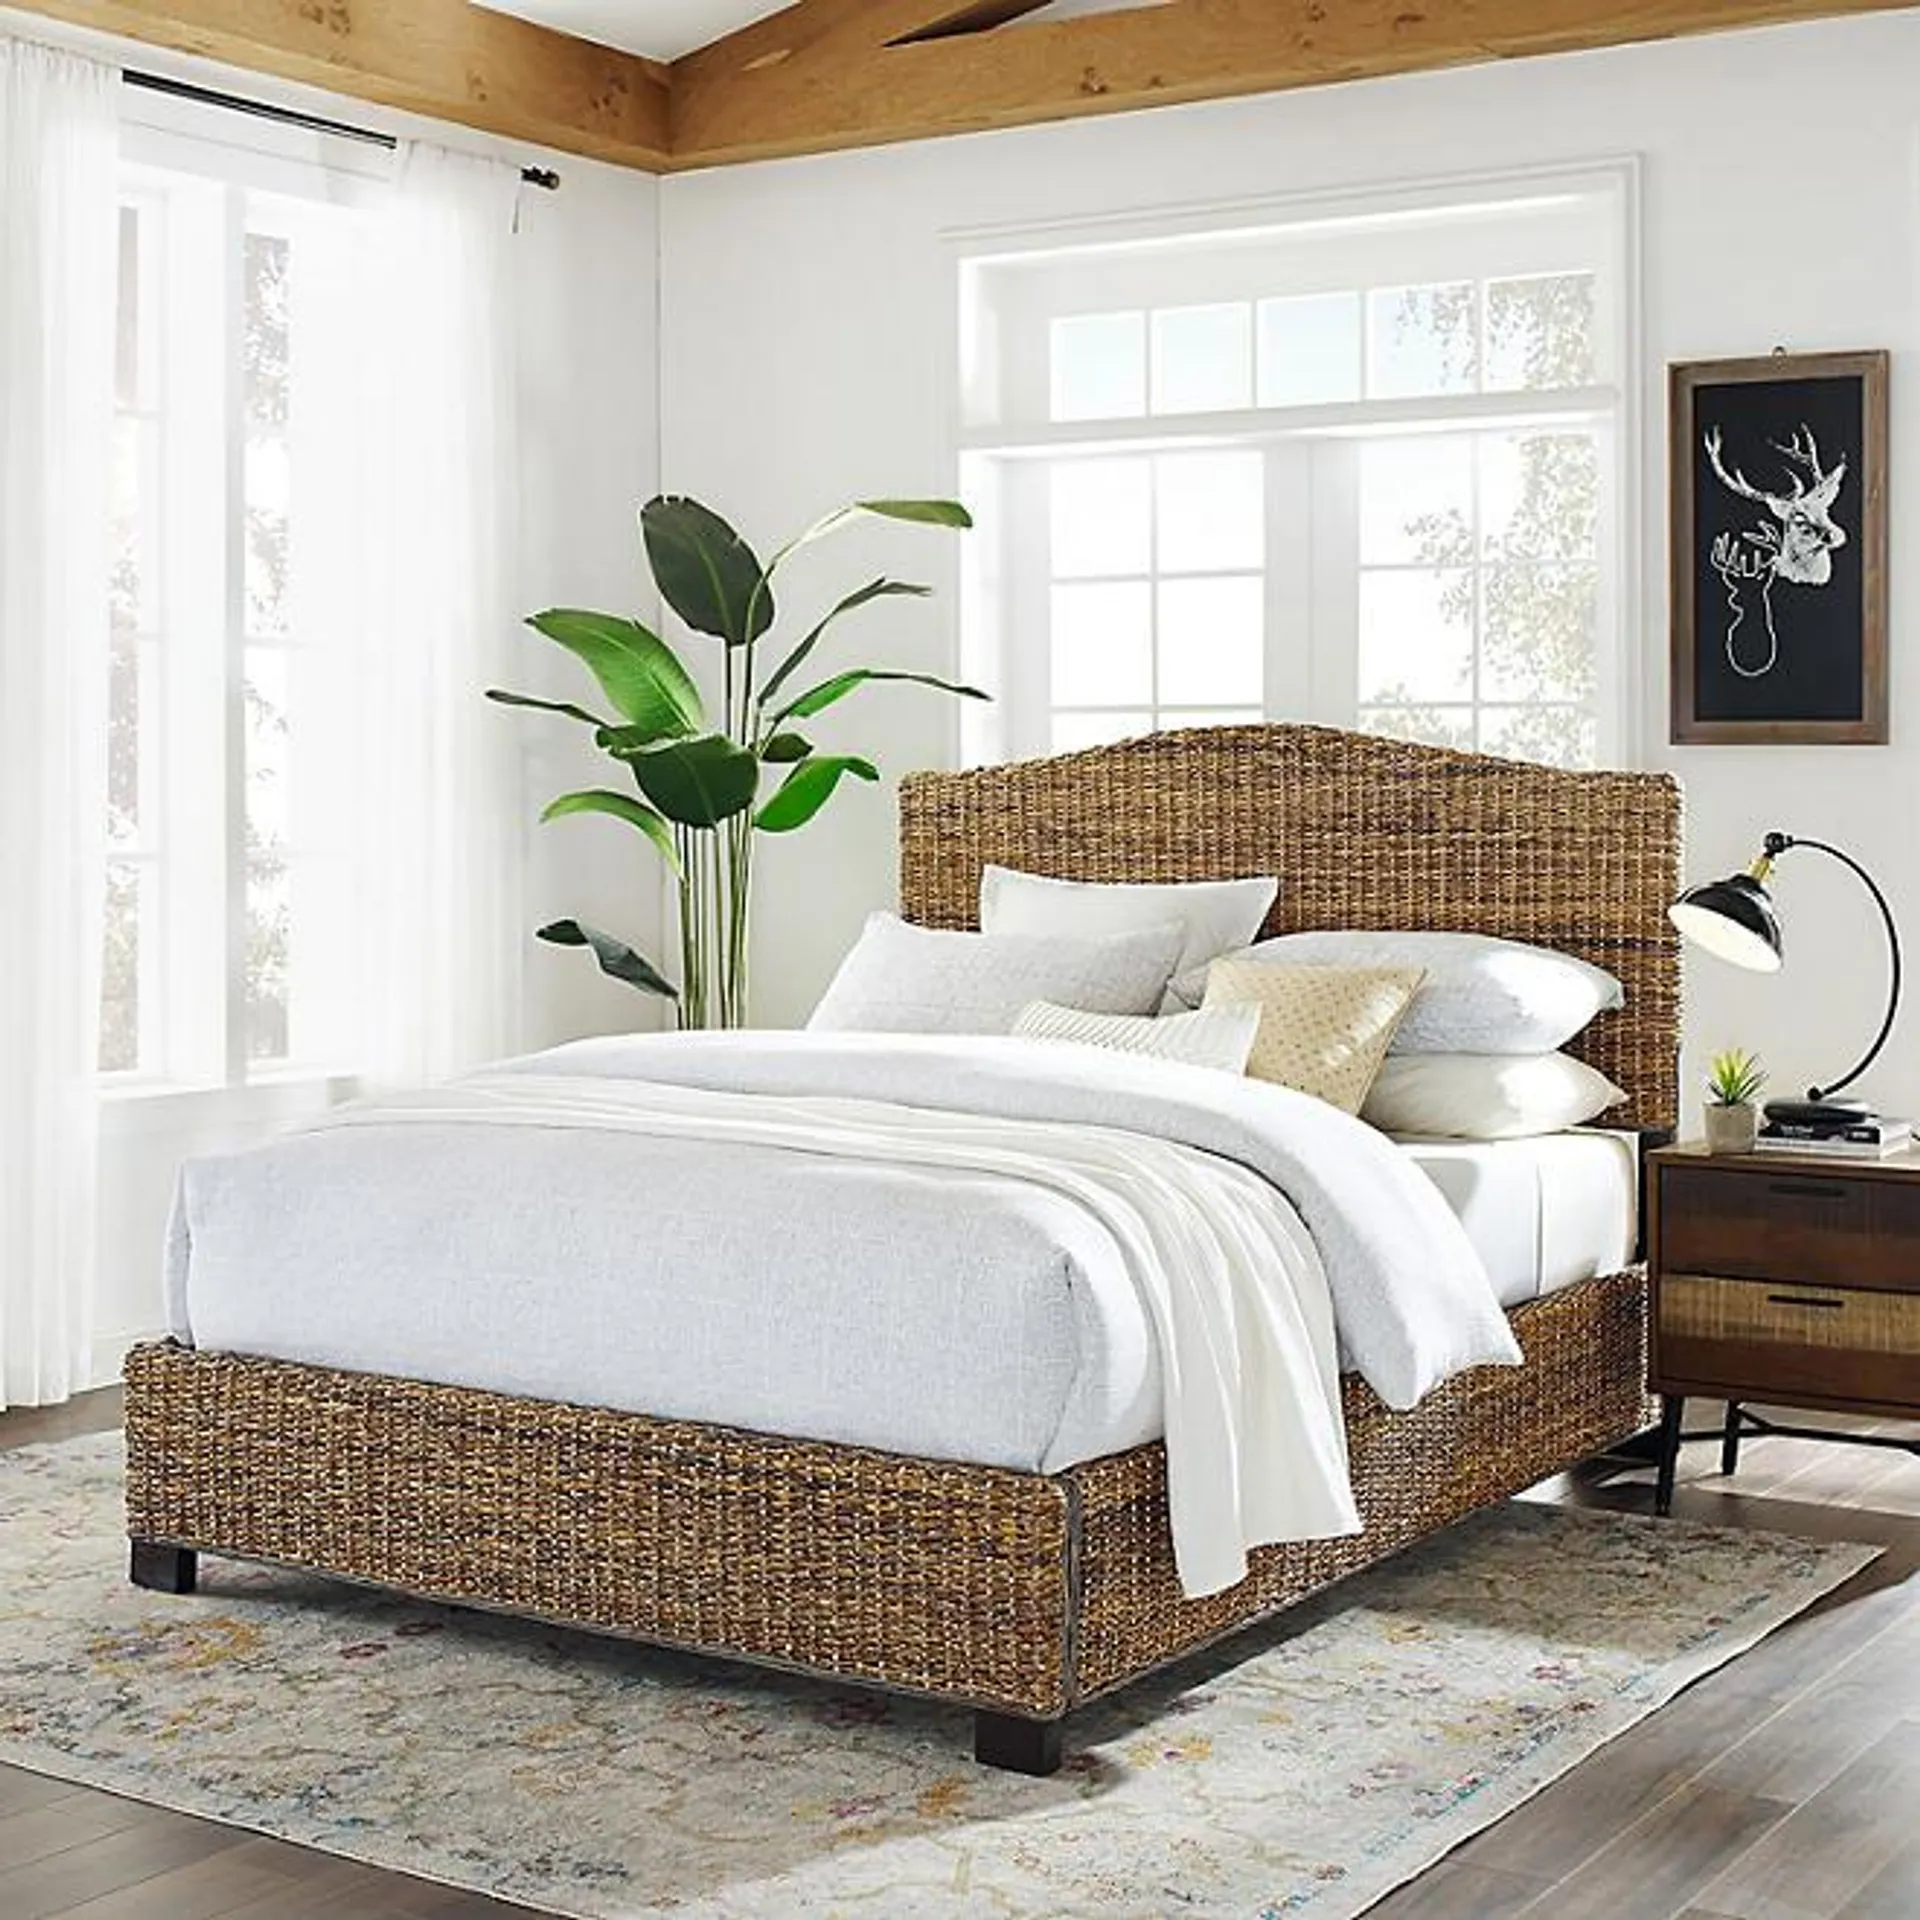 Crosley Furniture Natural Finish Serena Queen Bed